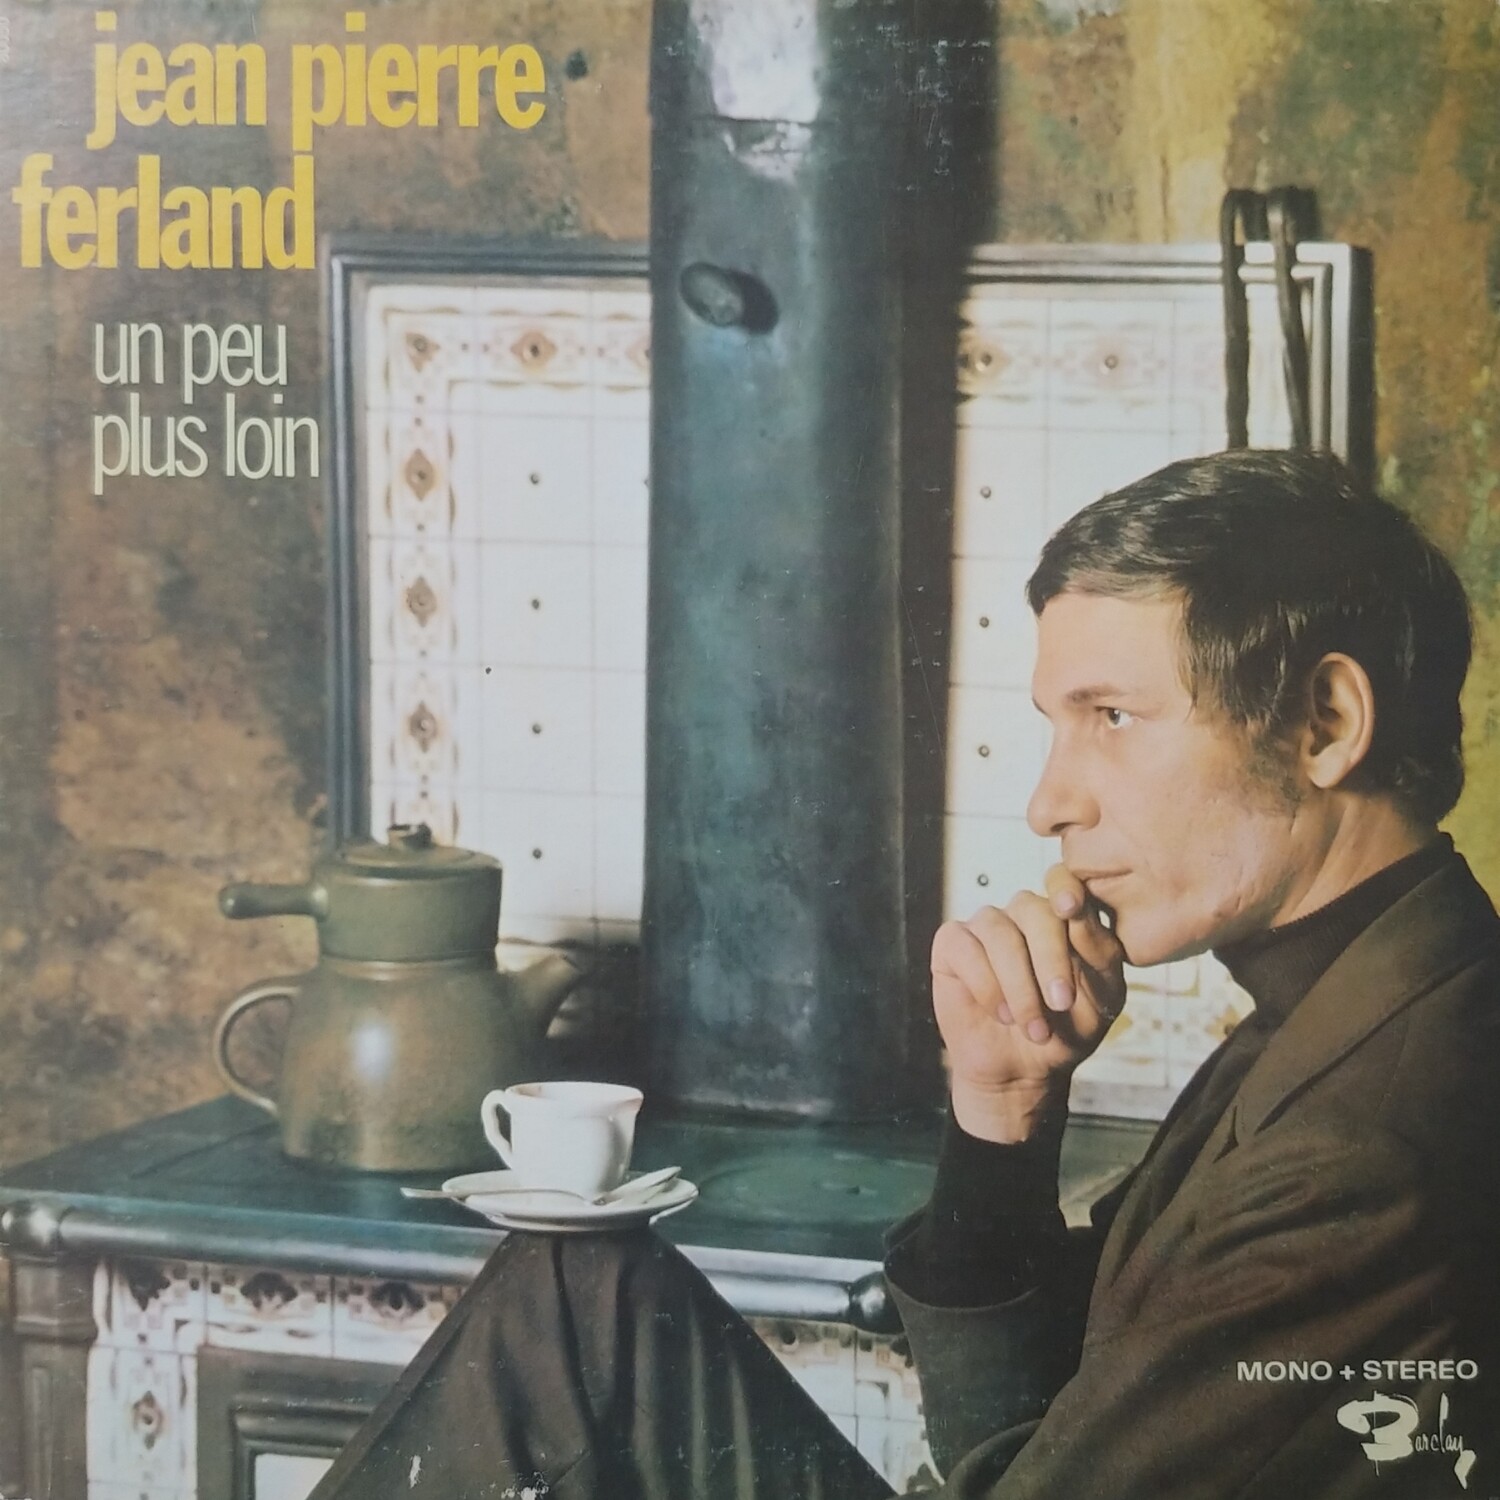 Jean-Pierre Ferland - Un peu plus loin